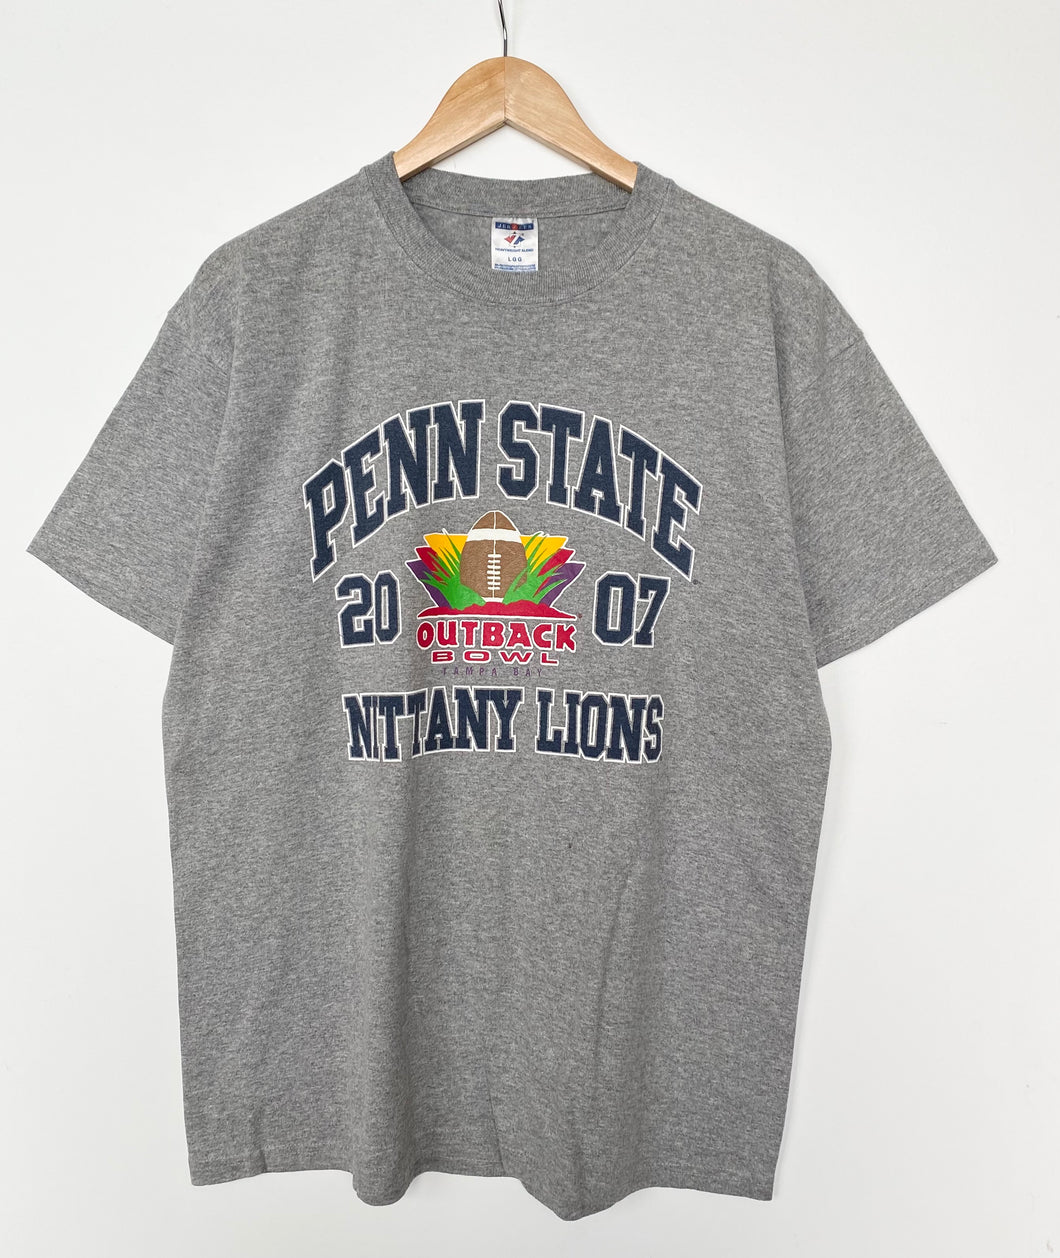 Penn State College t-shirt (L)